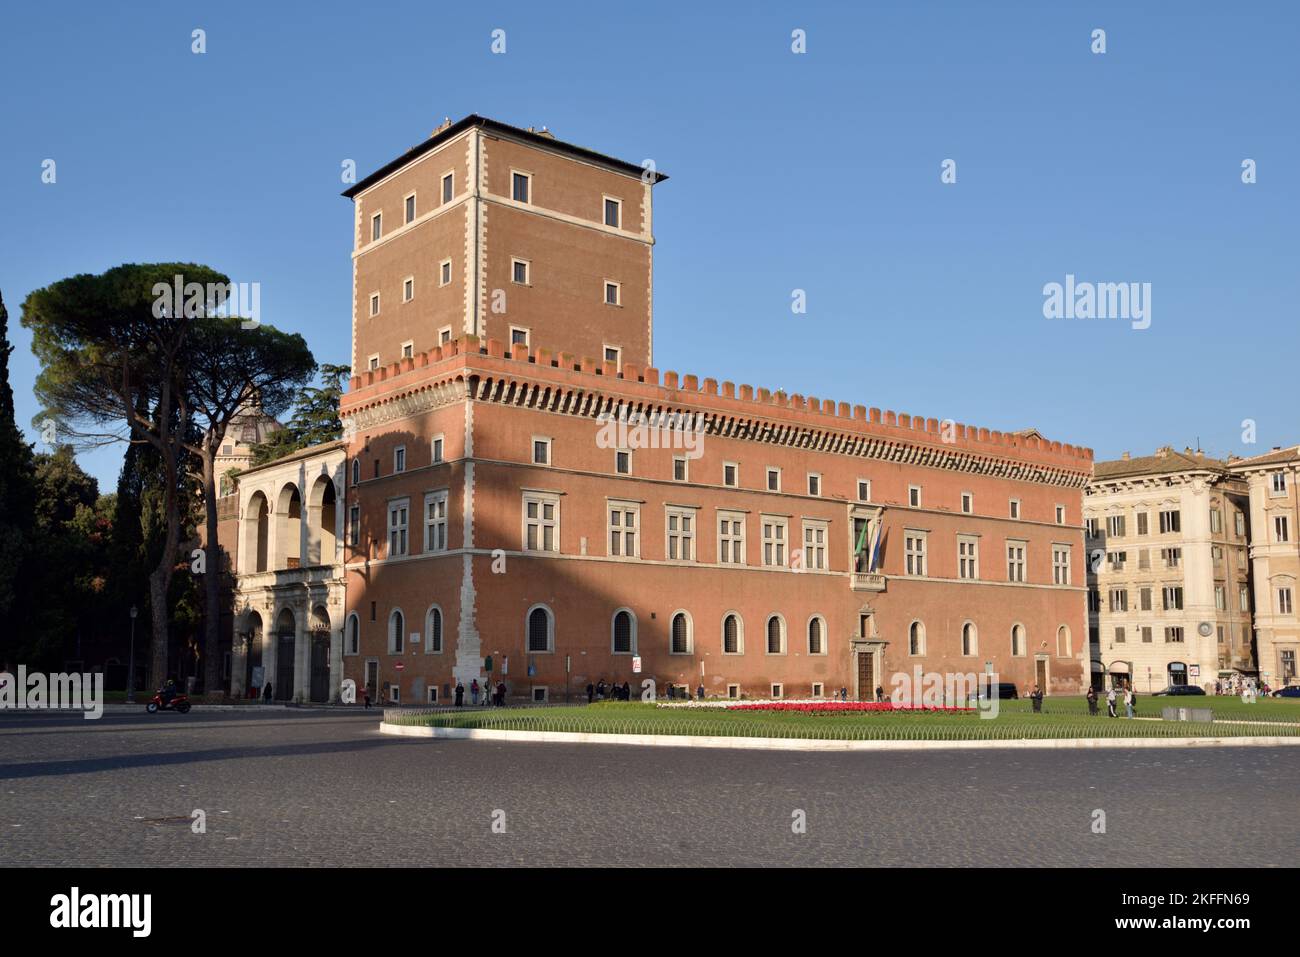 palazzo venezia, piazza venezia, rome, italie Banque D'Images